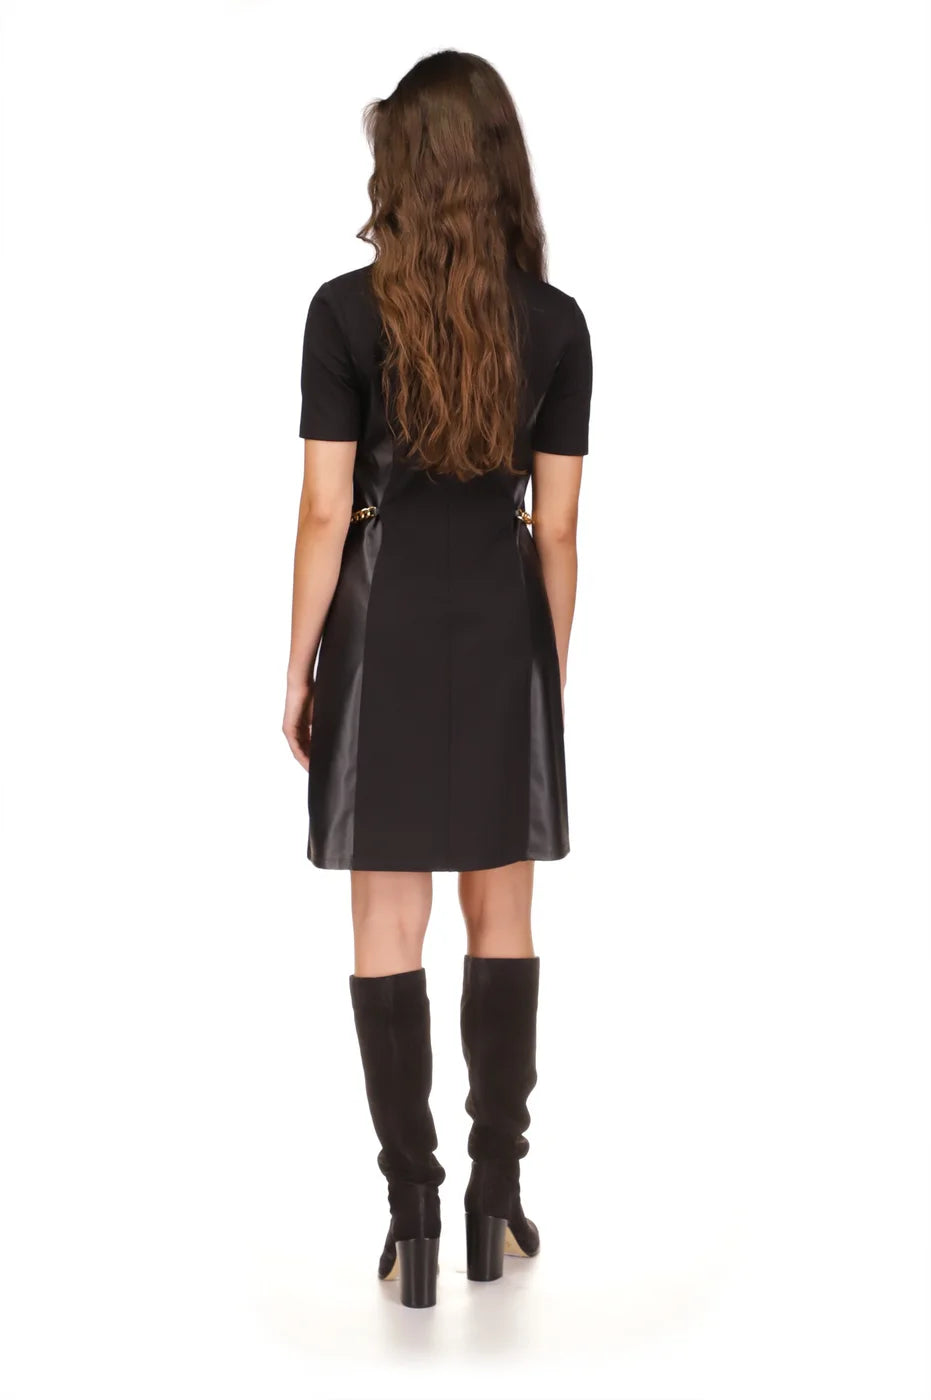 Michael Kors Faux Leather Side Dress